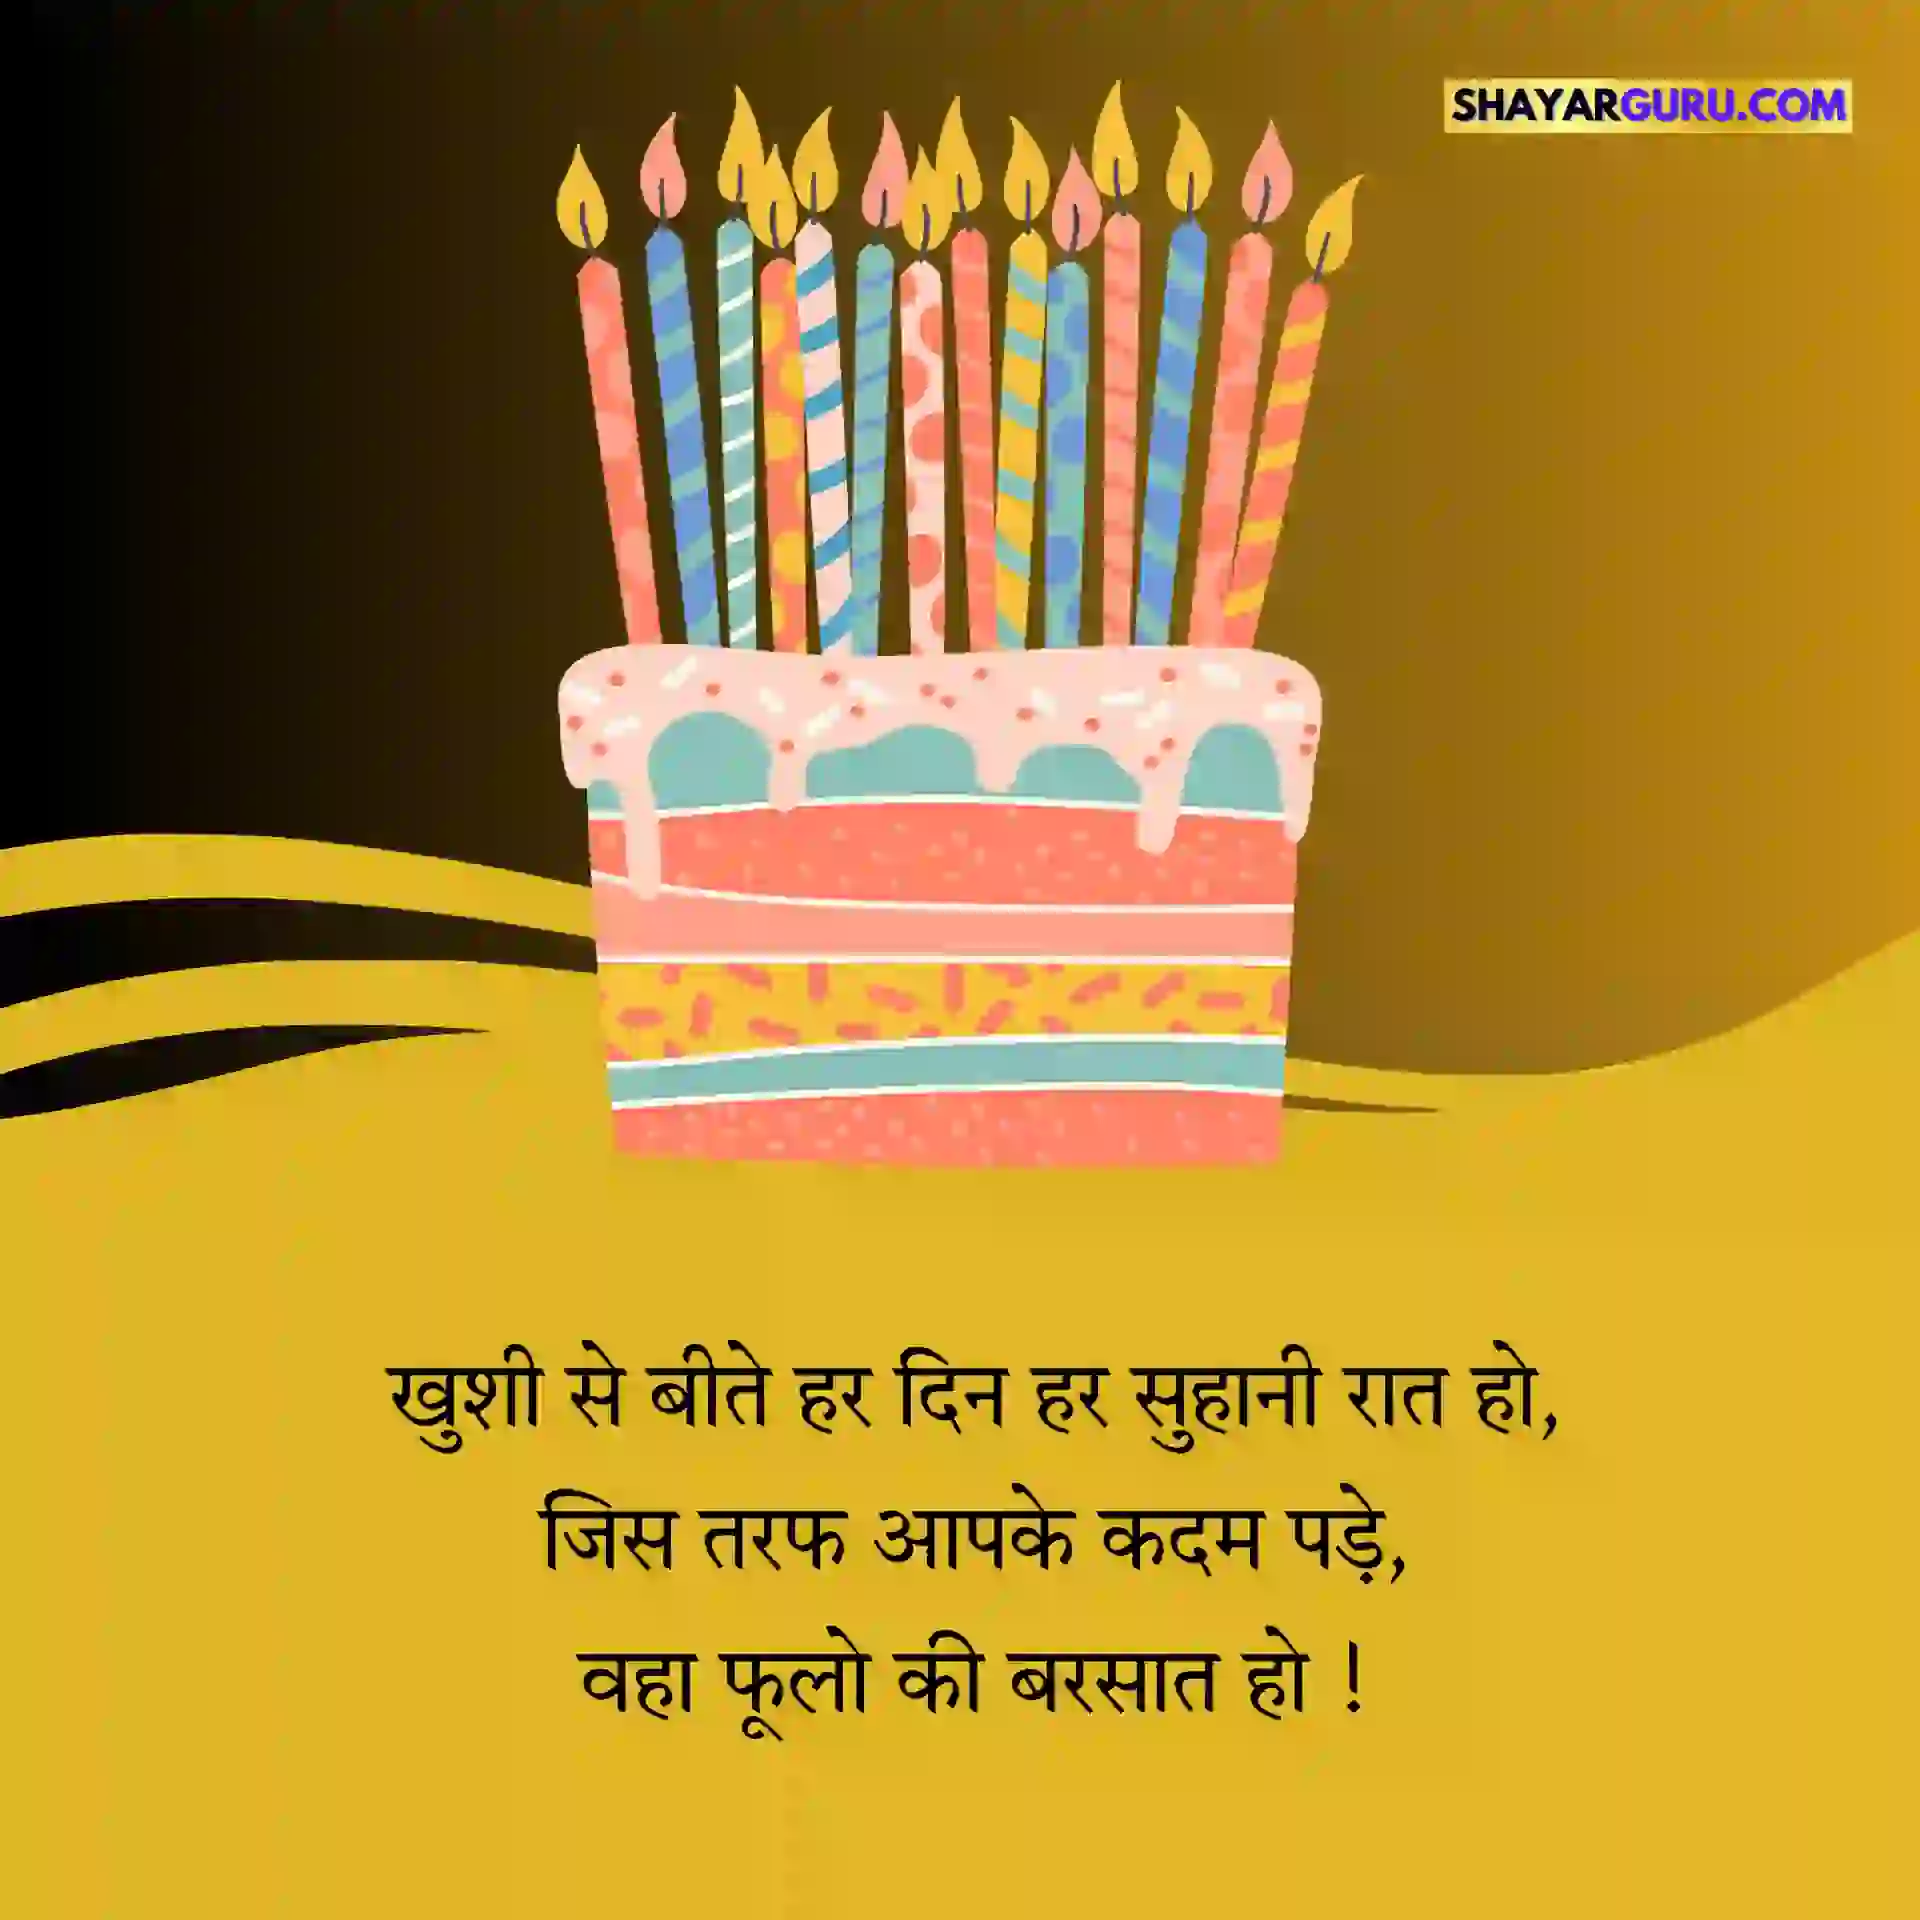 Happy Birthdaay Wishes Image Hindi